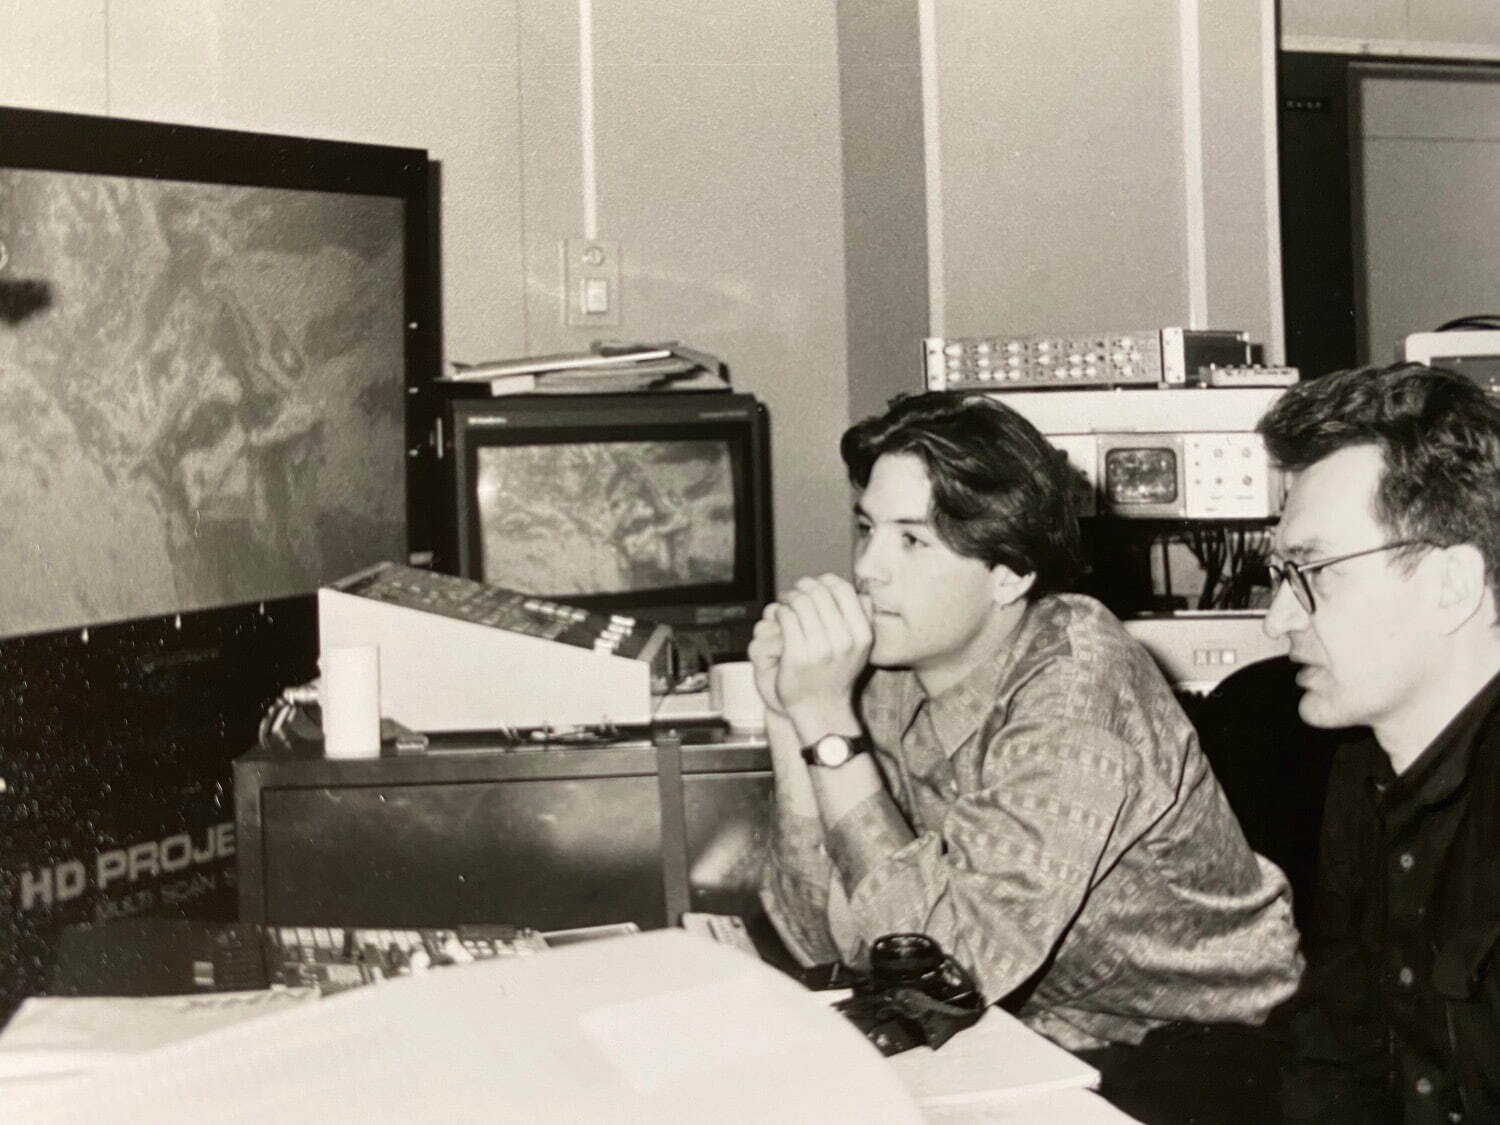 NHK編集室で「夢のシークエンス」を制作するヴィム・ヴェンダースとショーン・ノートン
1992年 撮影：御影雅良